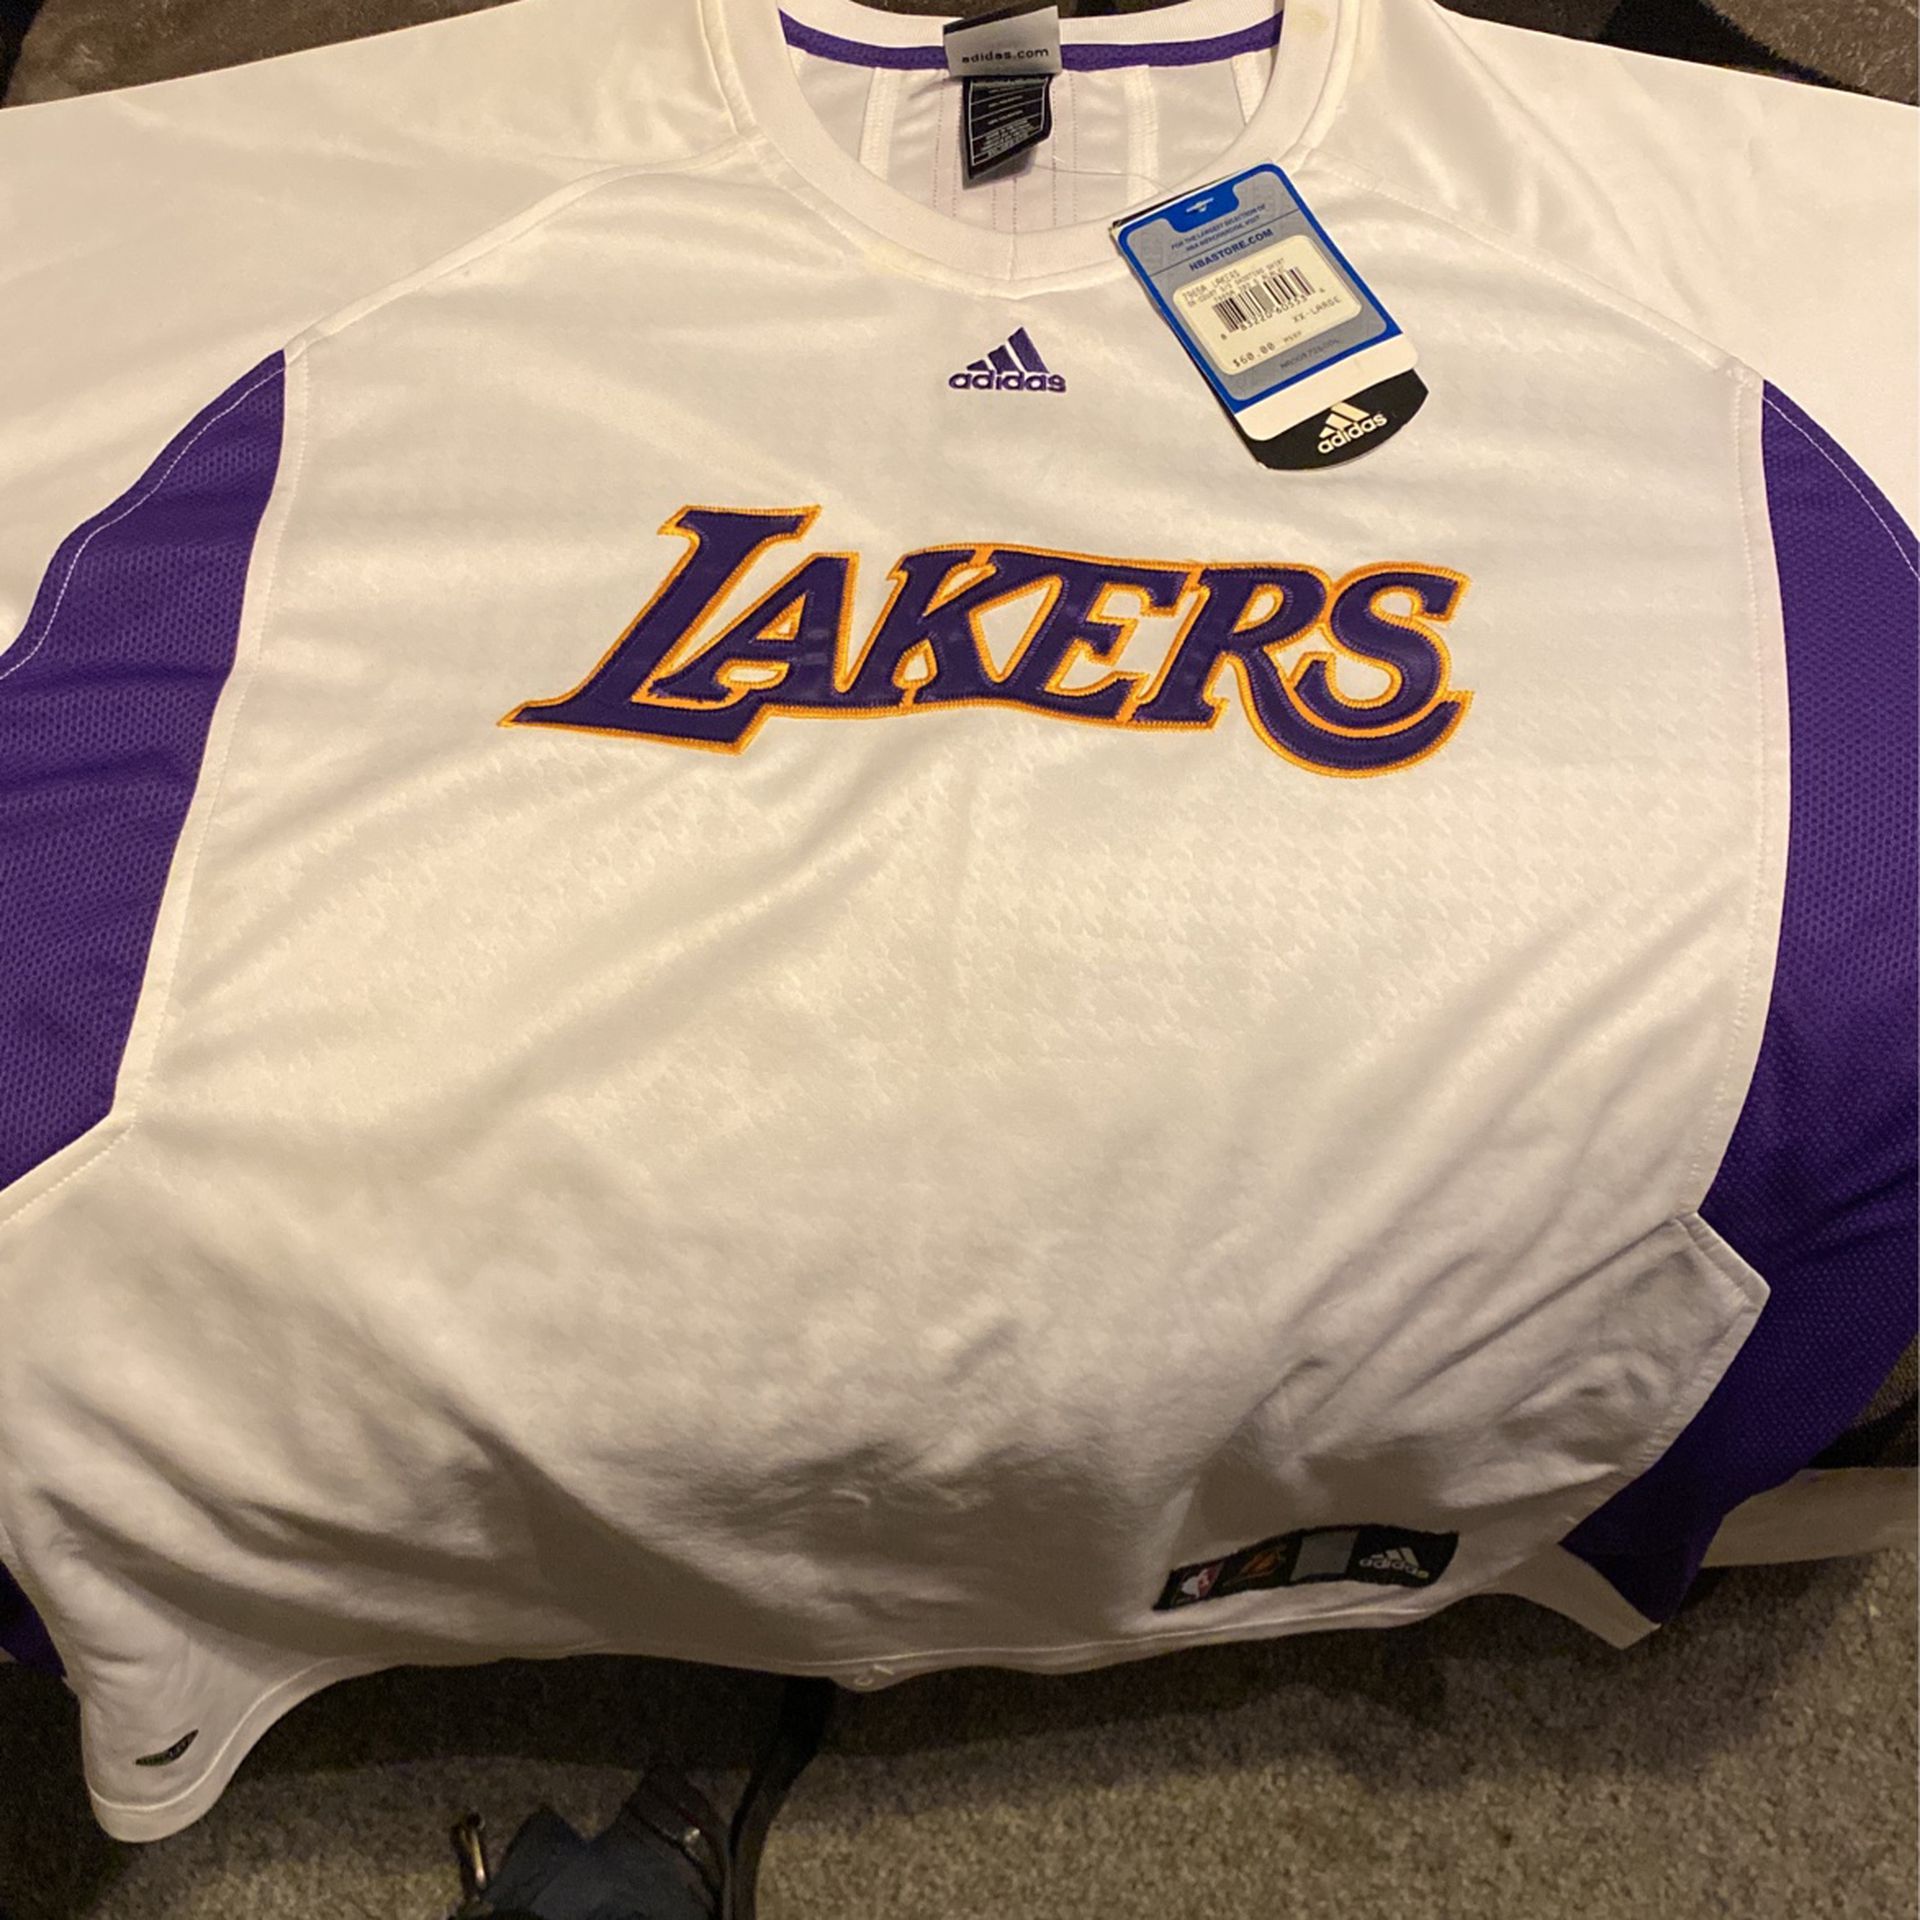 NBA Basketball Jerseys for Sale in Anaheim, CA - OfferUp